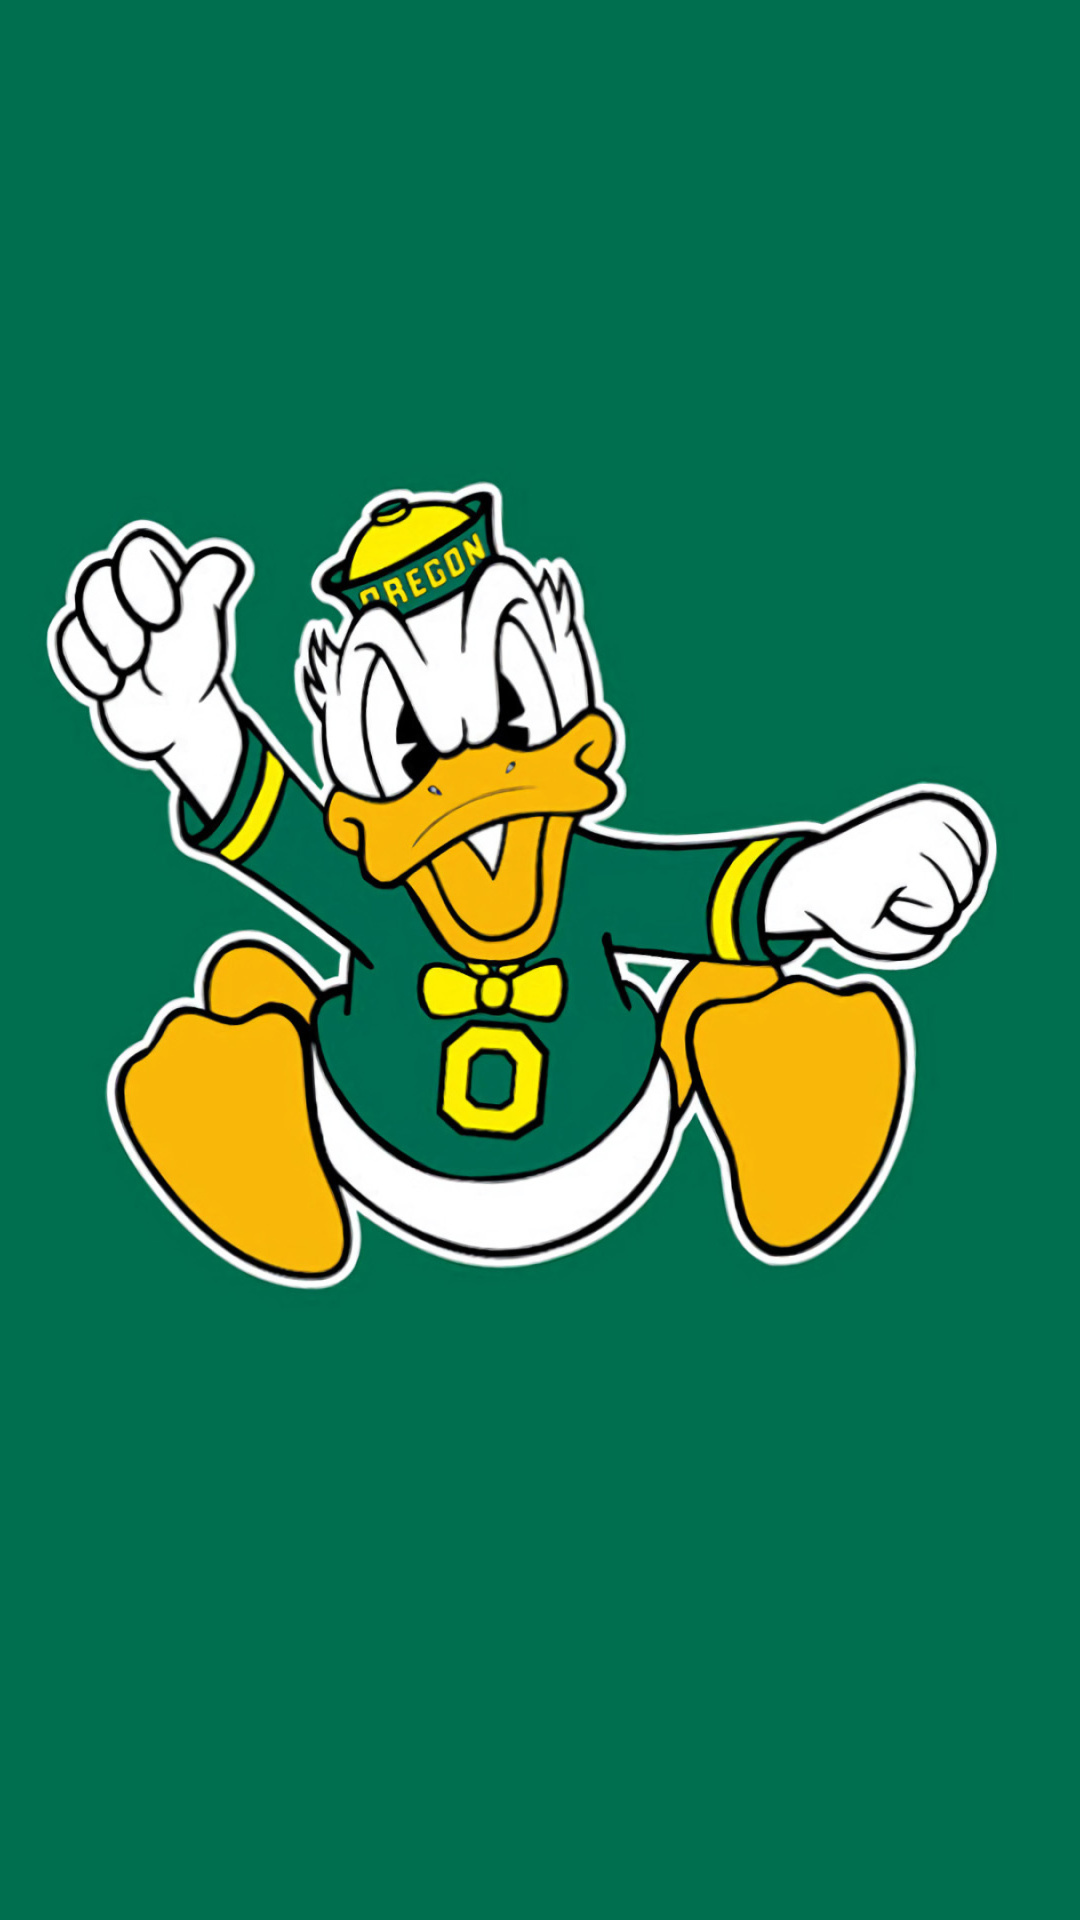 Oregon Ducks University Football Team wallpaper 1080x1920